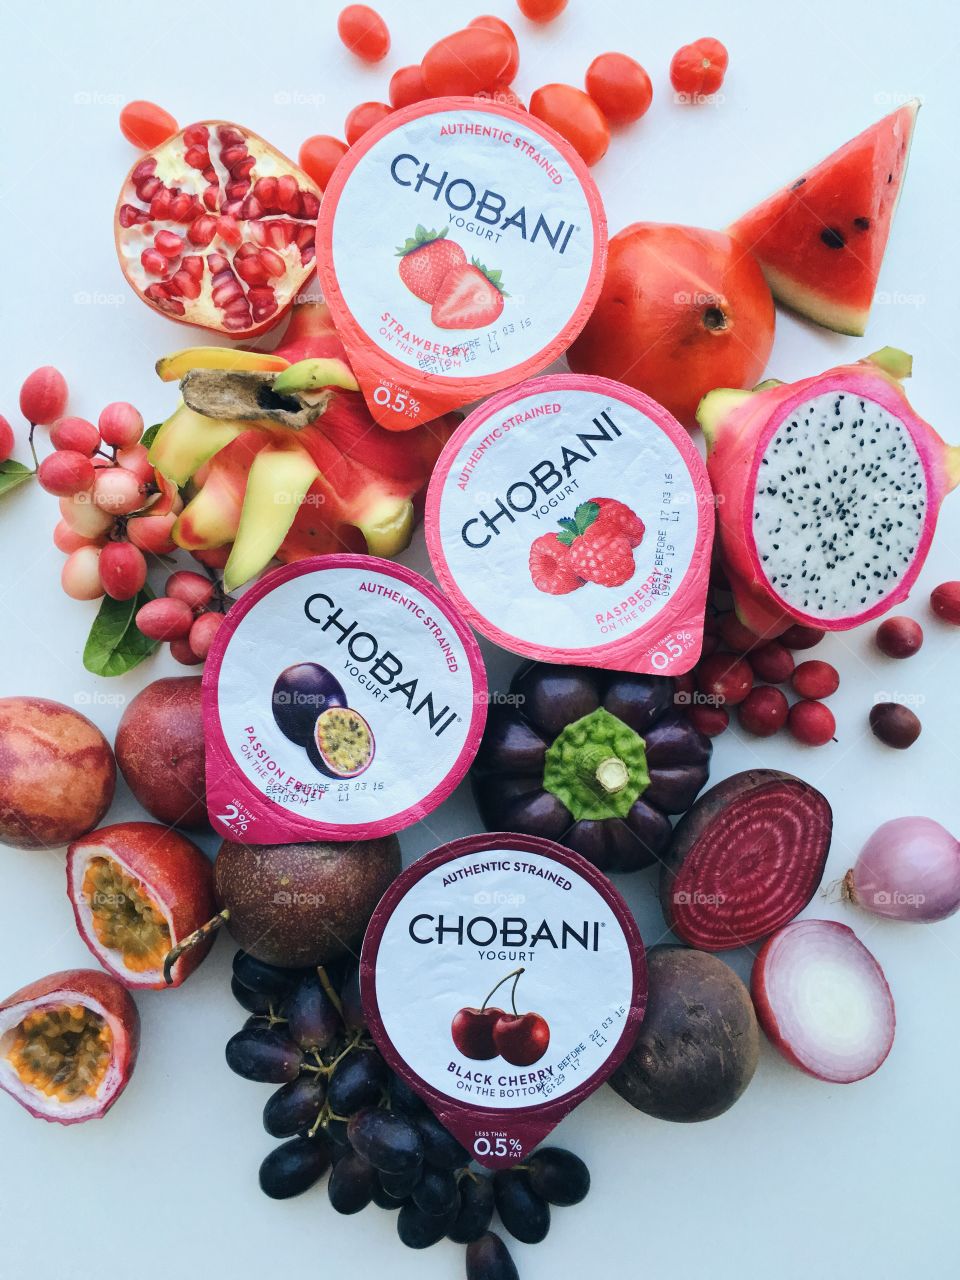 CHOBANI Flat Lays : Chobani variety with healthy ingredients.